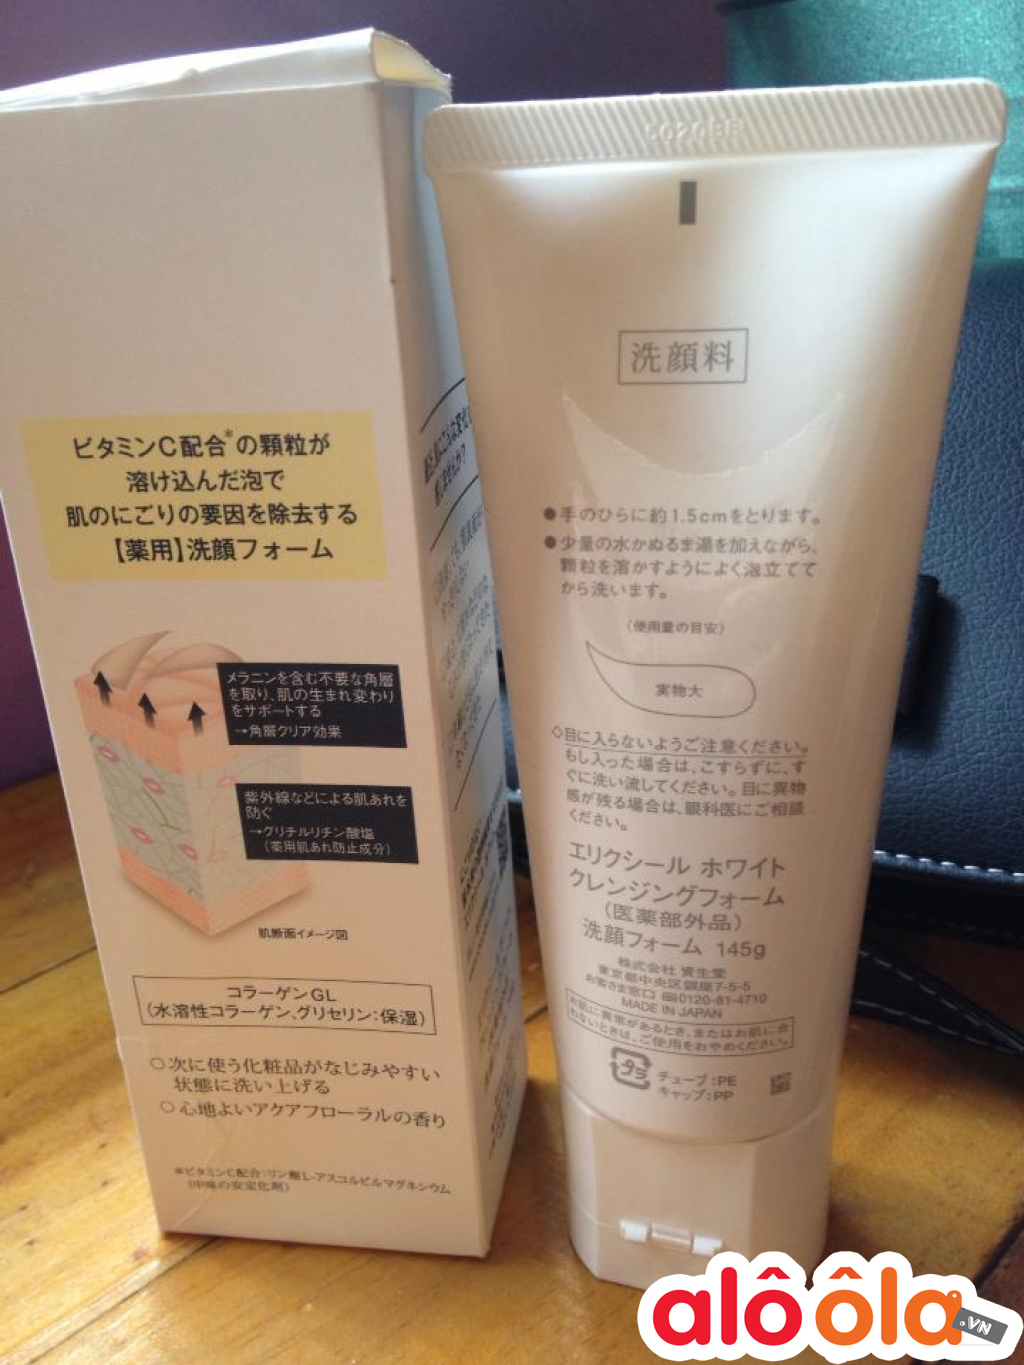 Mặt sau của sửa rửa mặt Shiseido Elixir White Purify Cleaning Foam